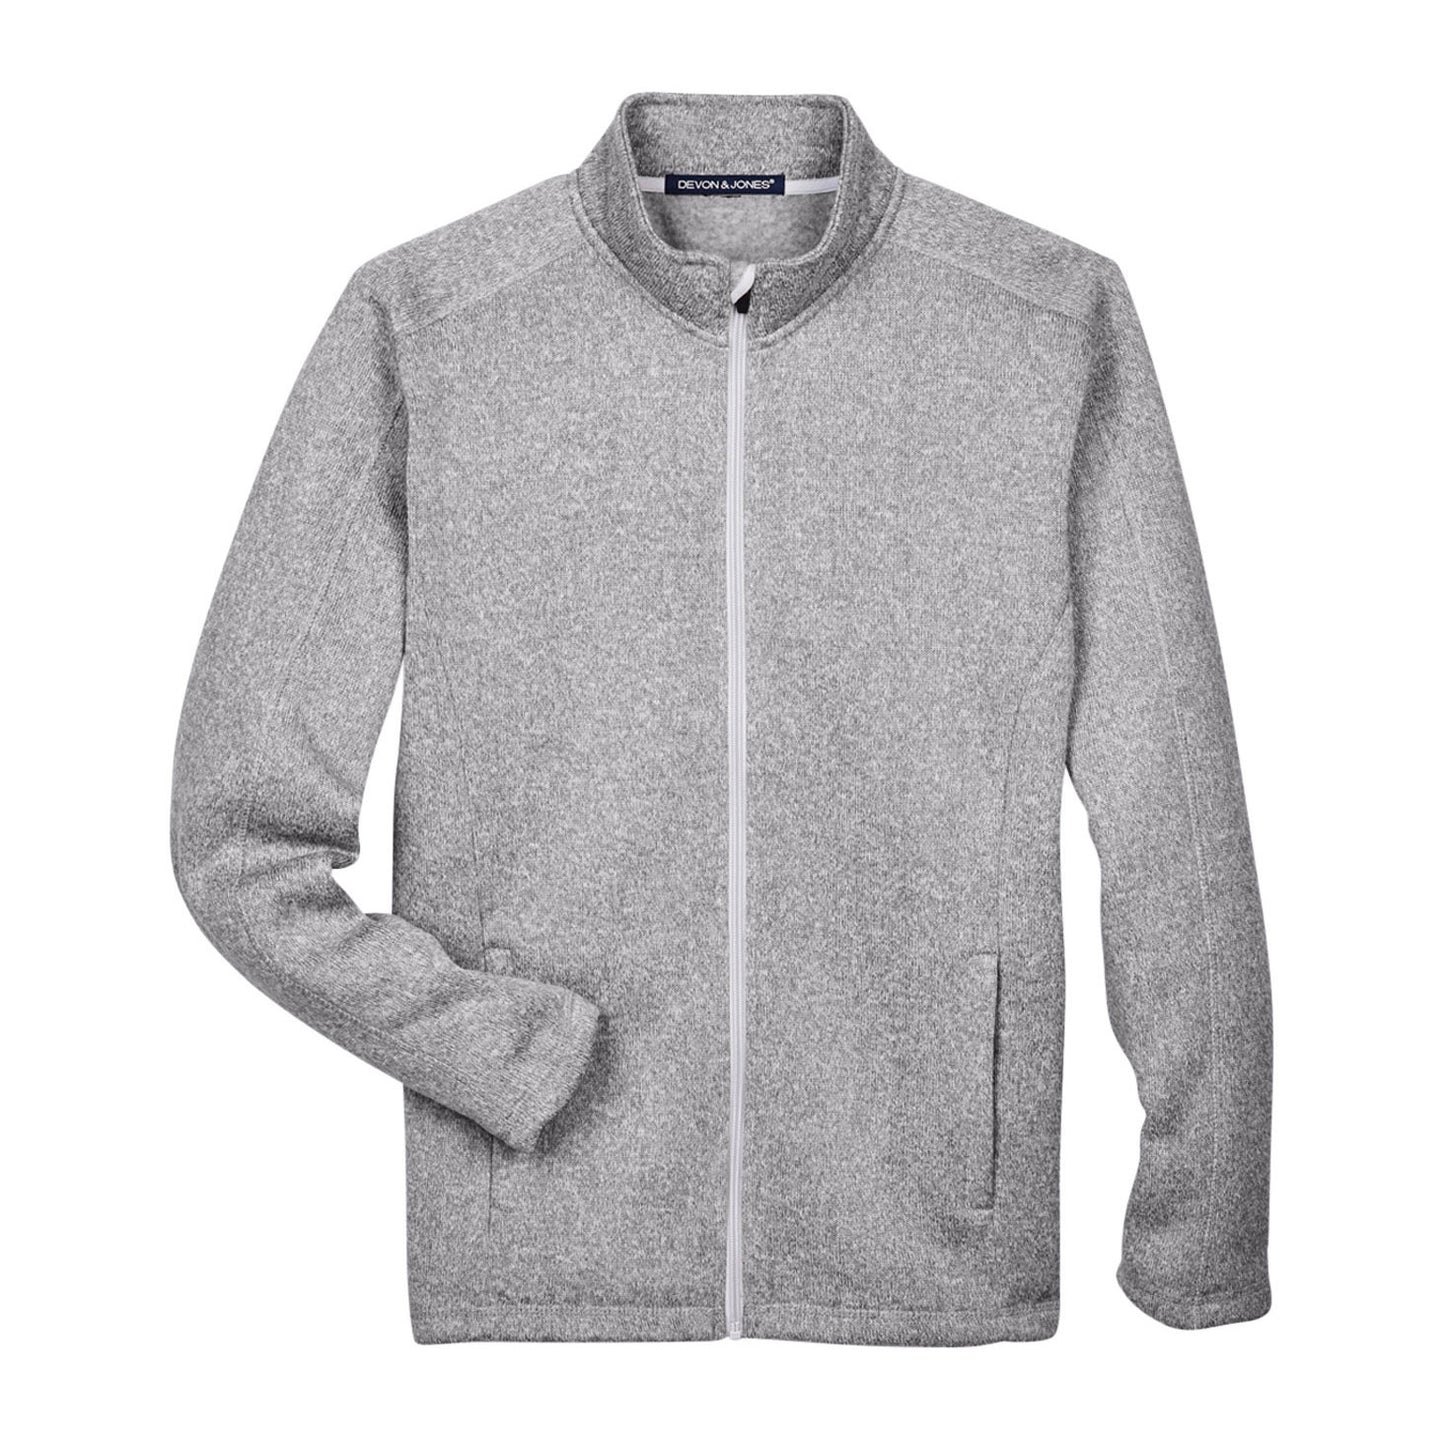 CGSC Sweater - Full-Zip